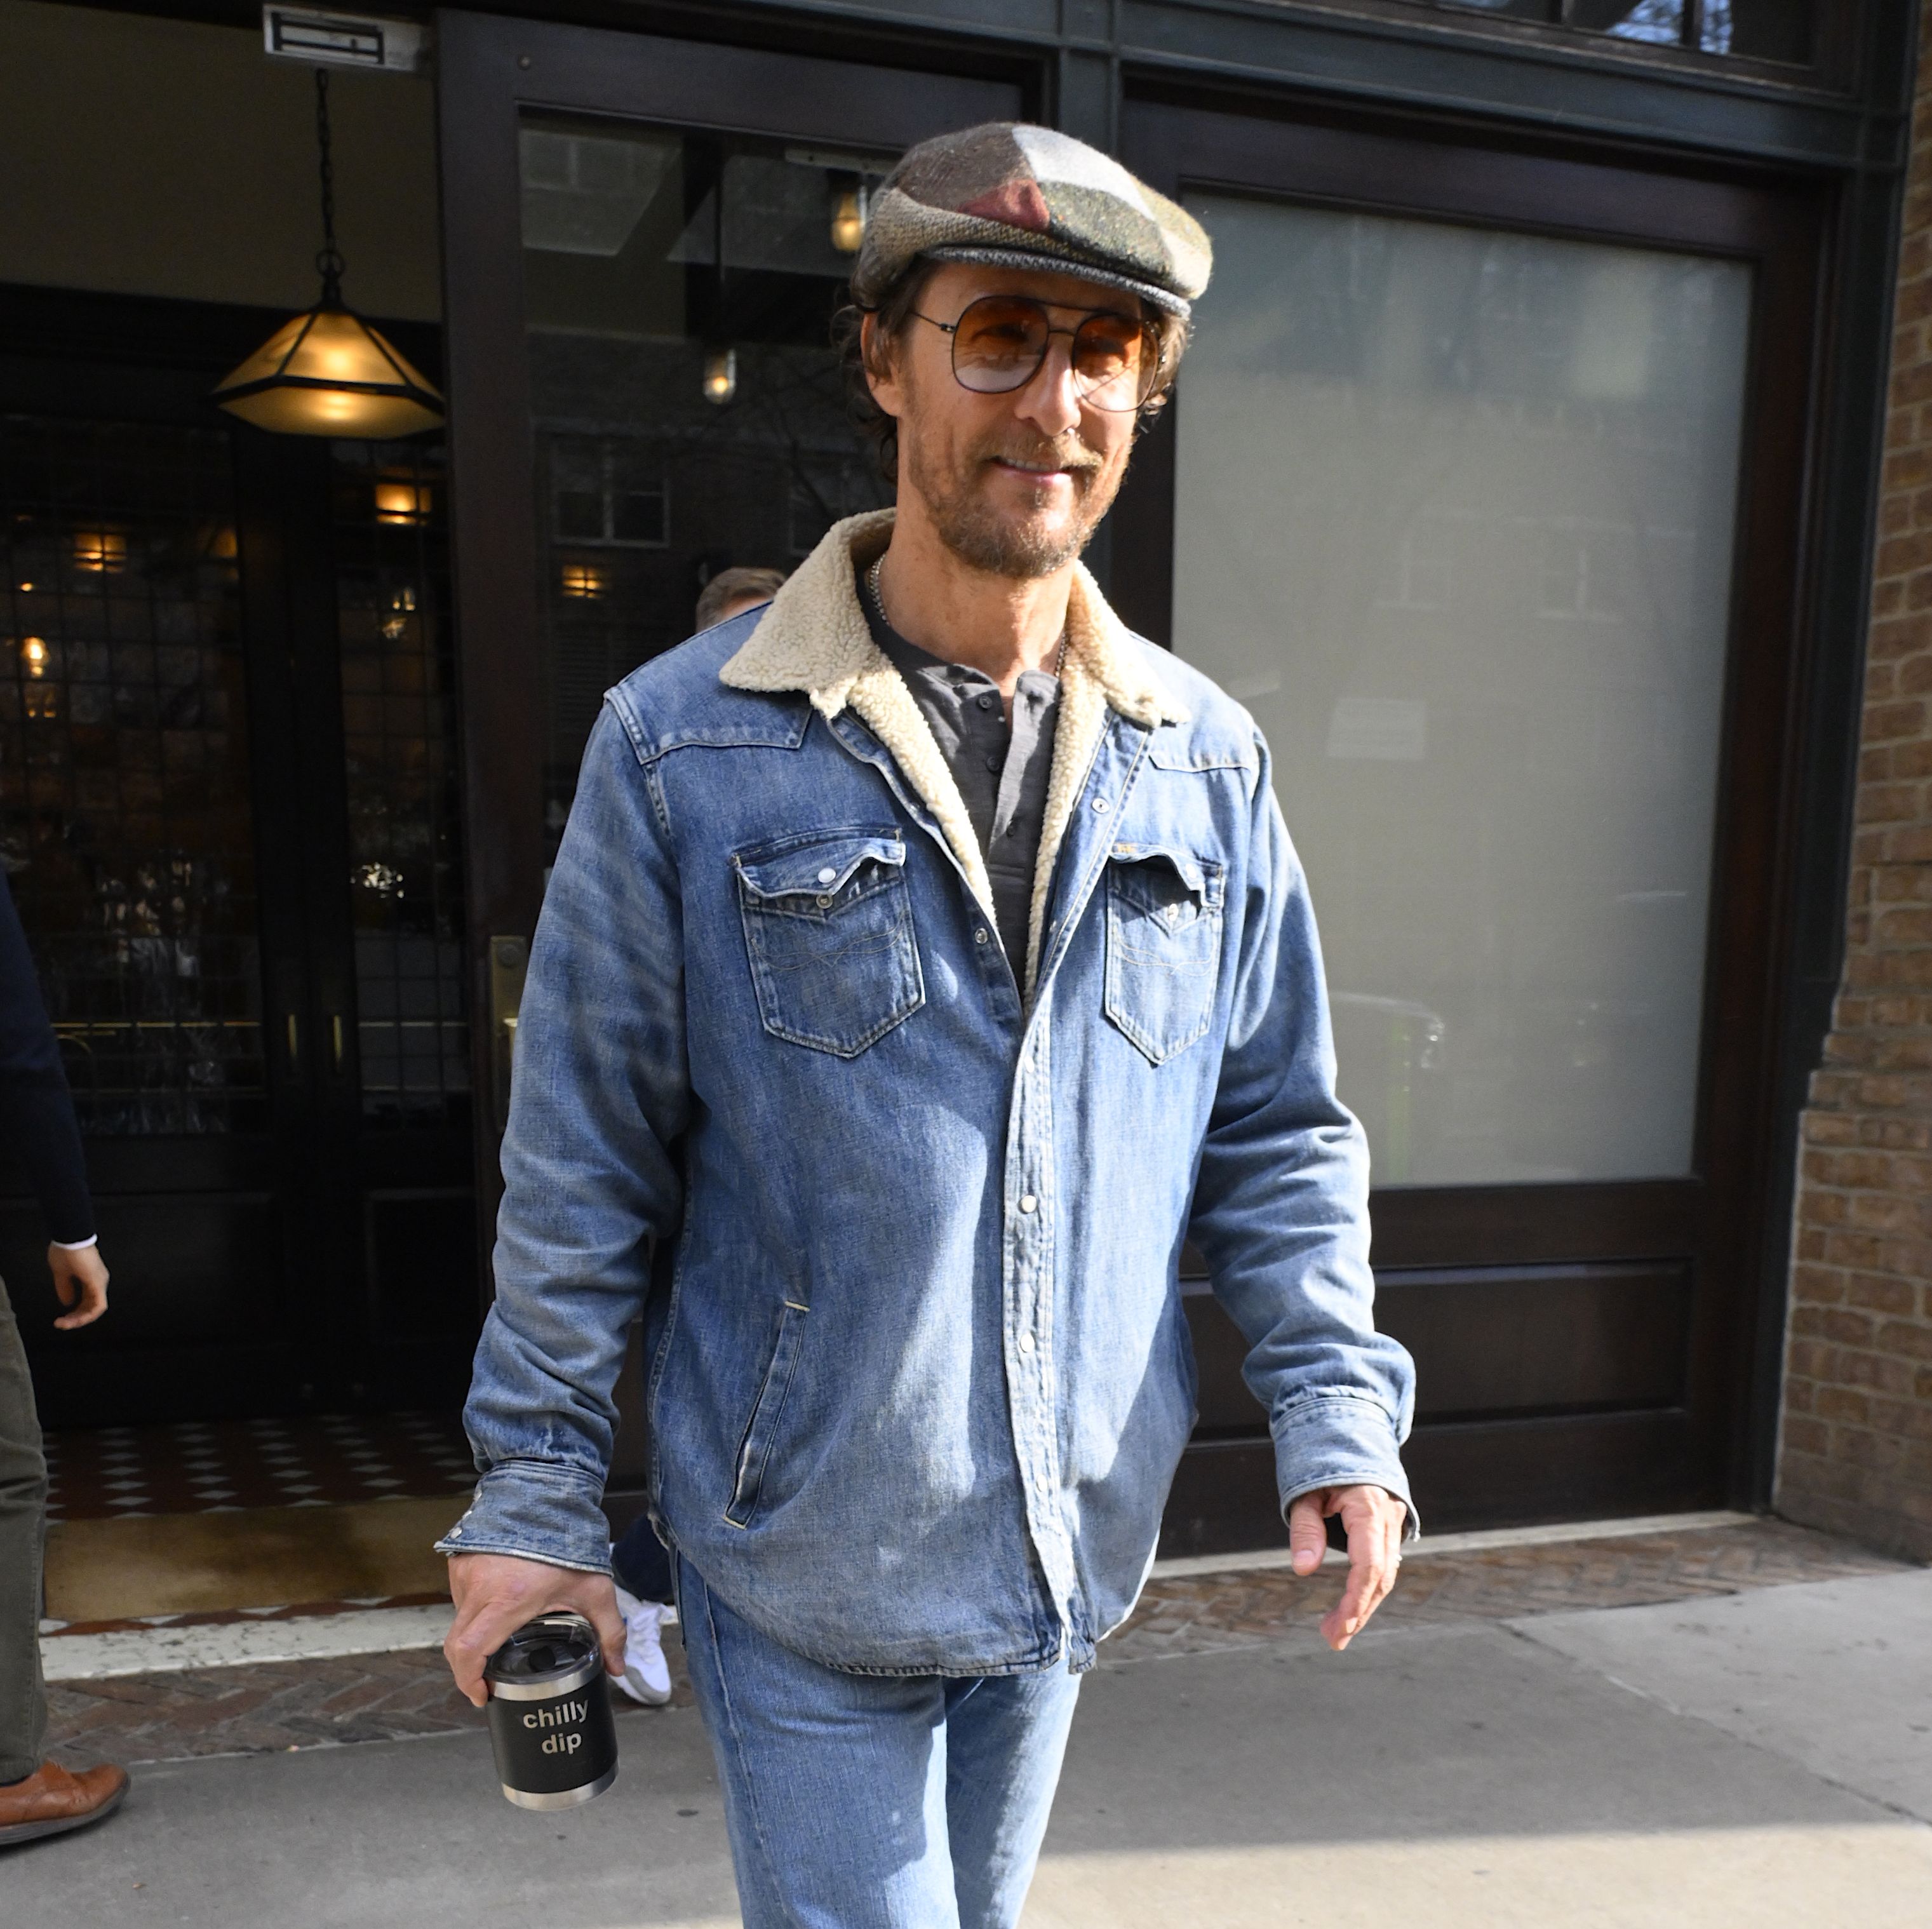 Matthew McConaughey's Go-To Winter Outfit Is Denim on Denim